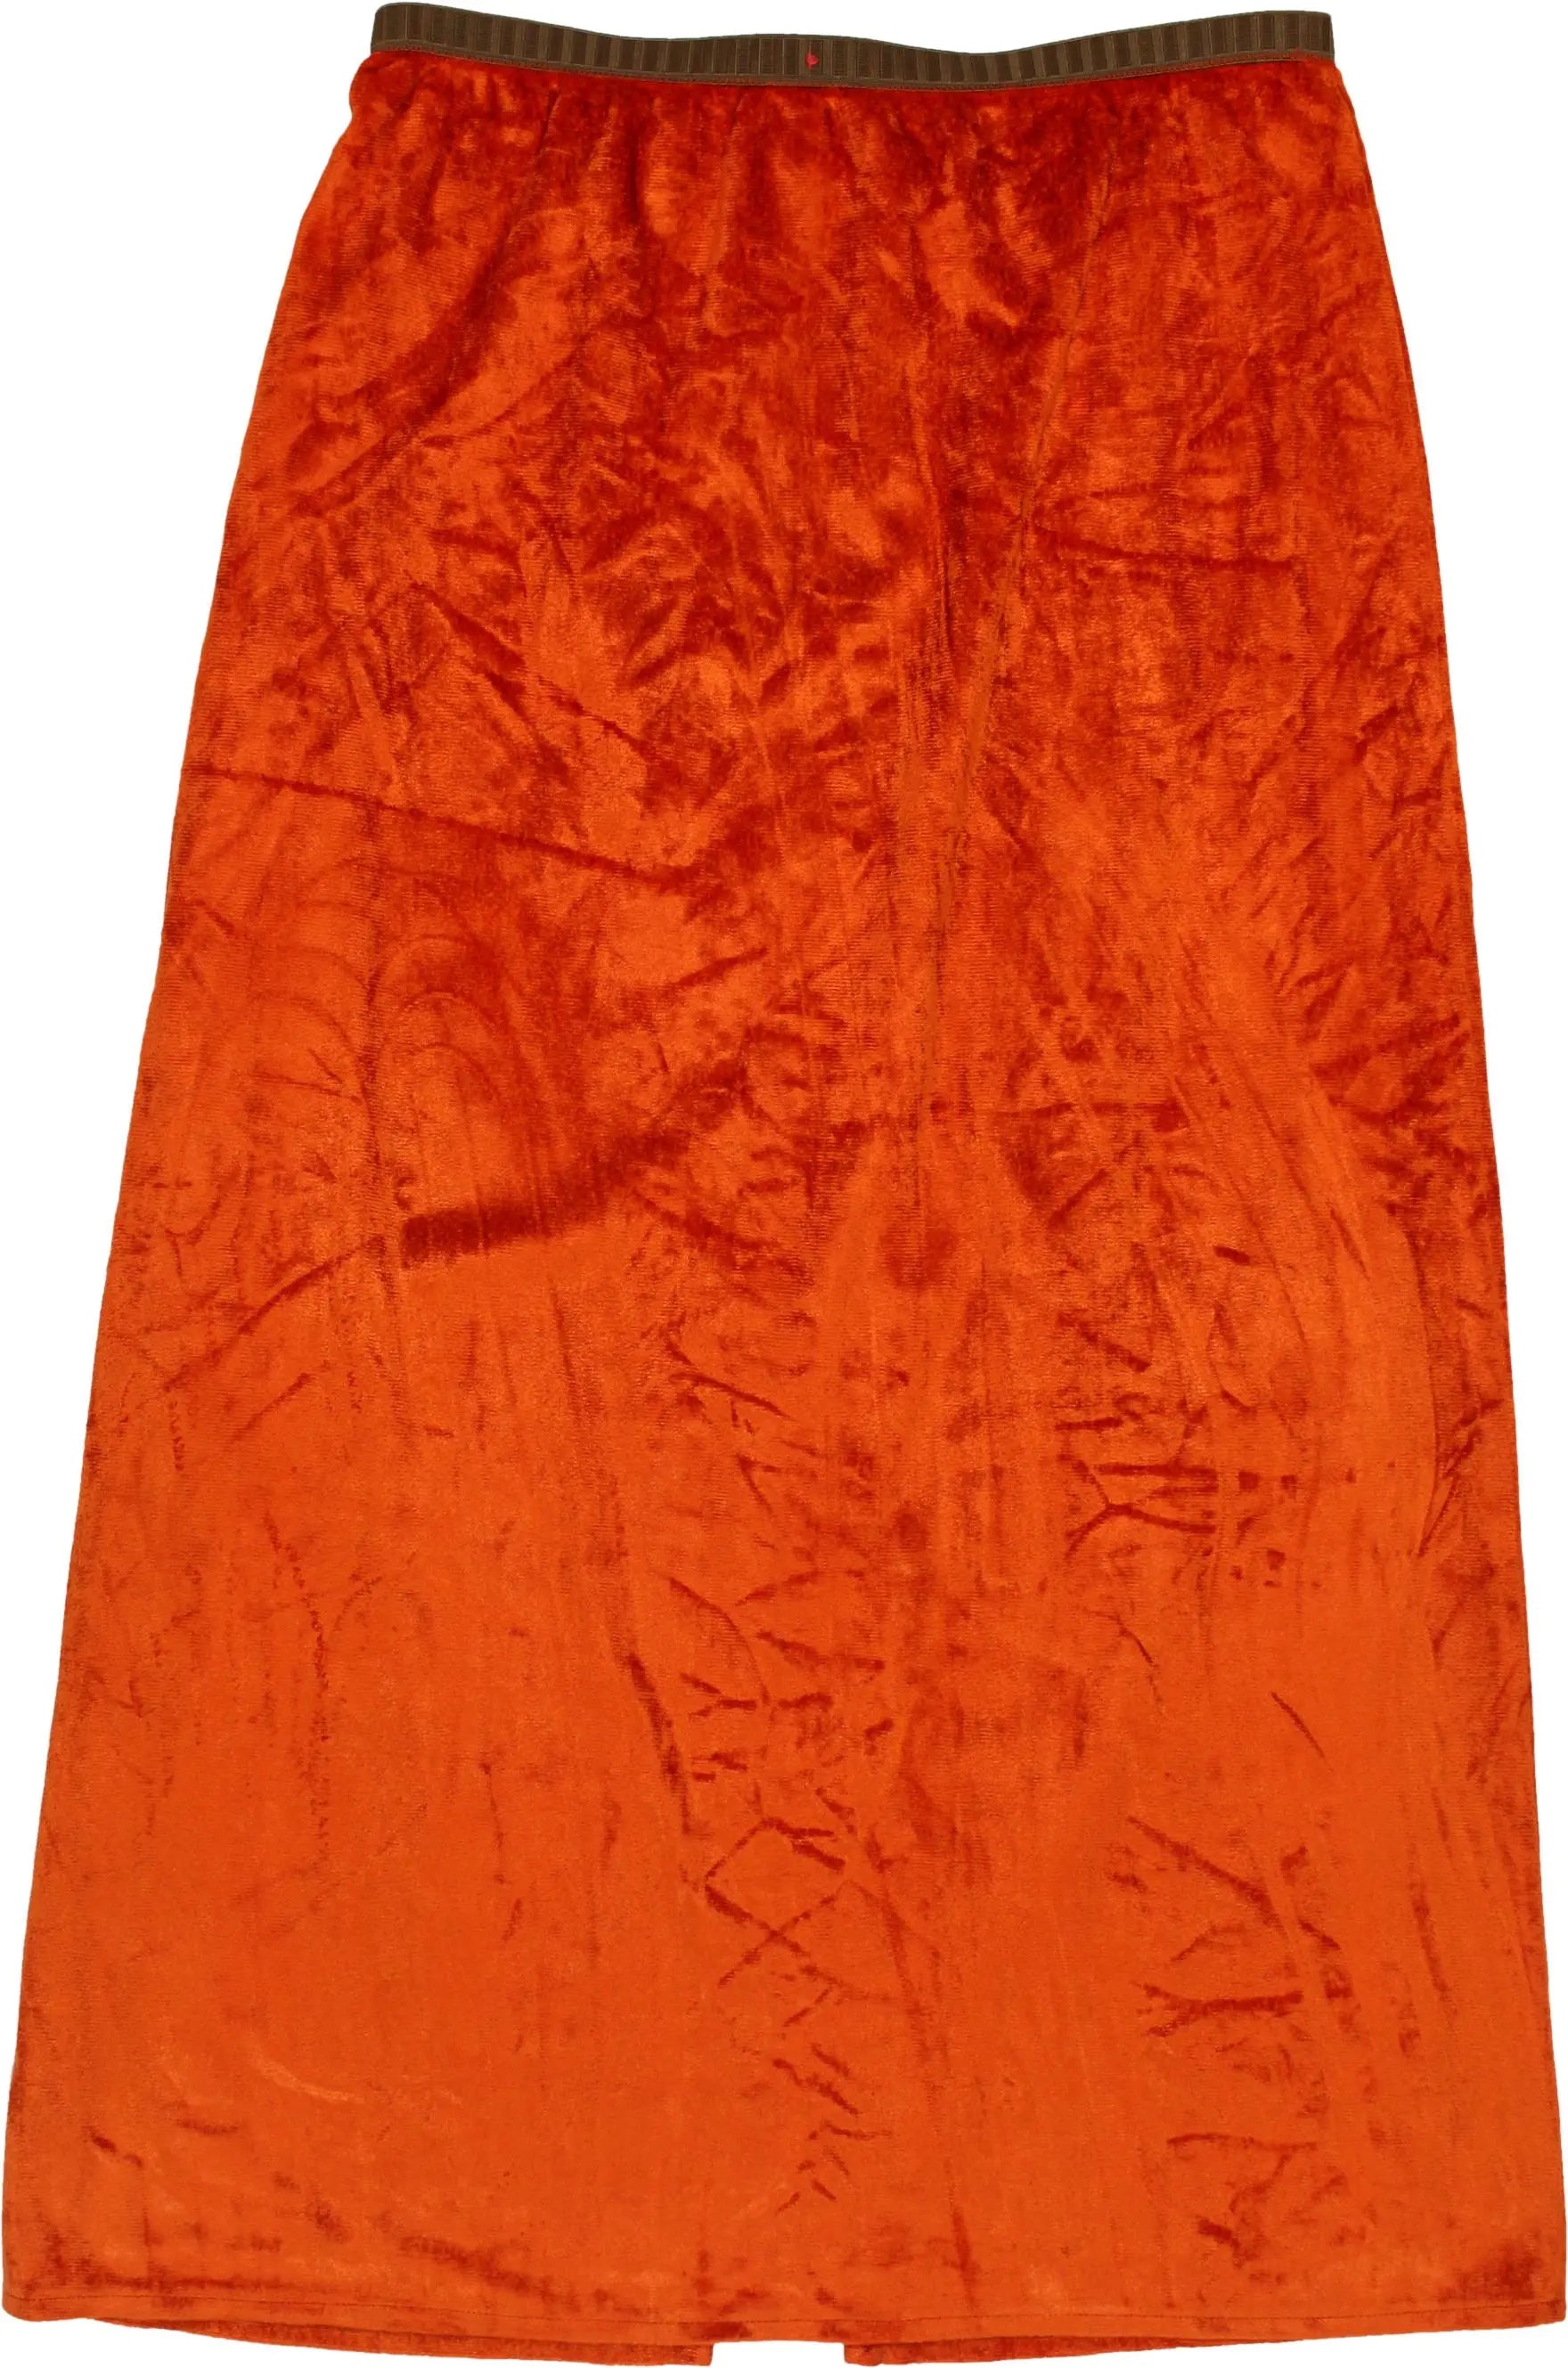 Handmade - Velvet Maxi Skirt- ThriftTale.com - Vintage and second handclothing